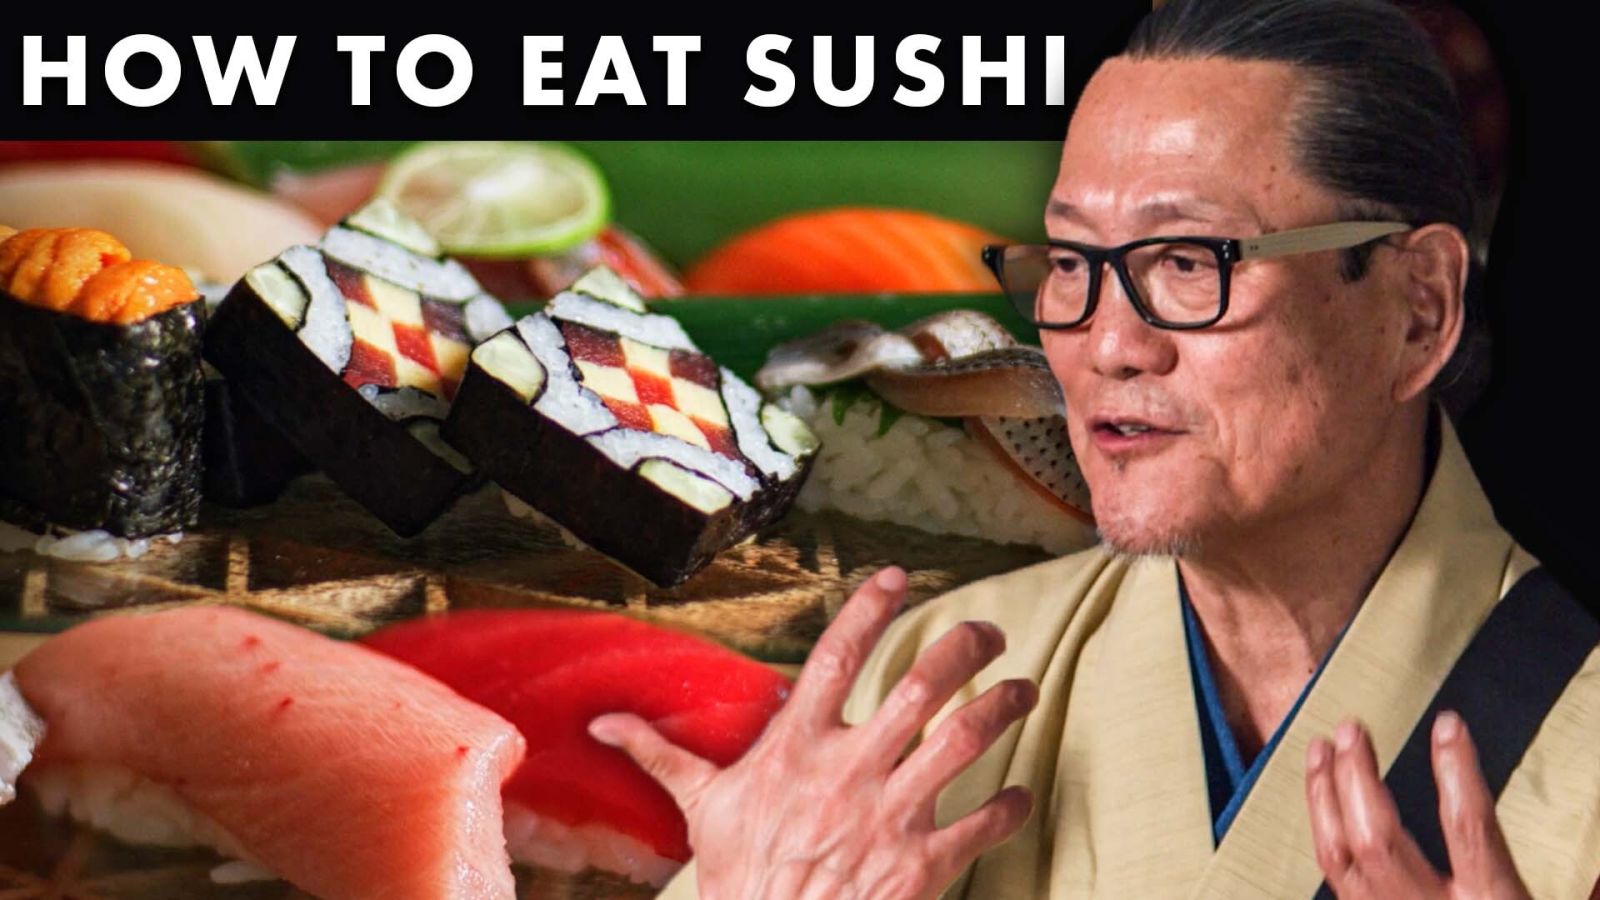 Iron Chef Masaharu Morimoto Teaches You How To Eat Sushi